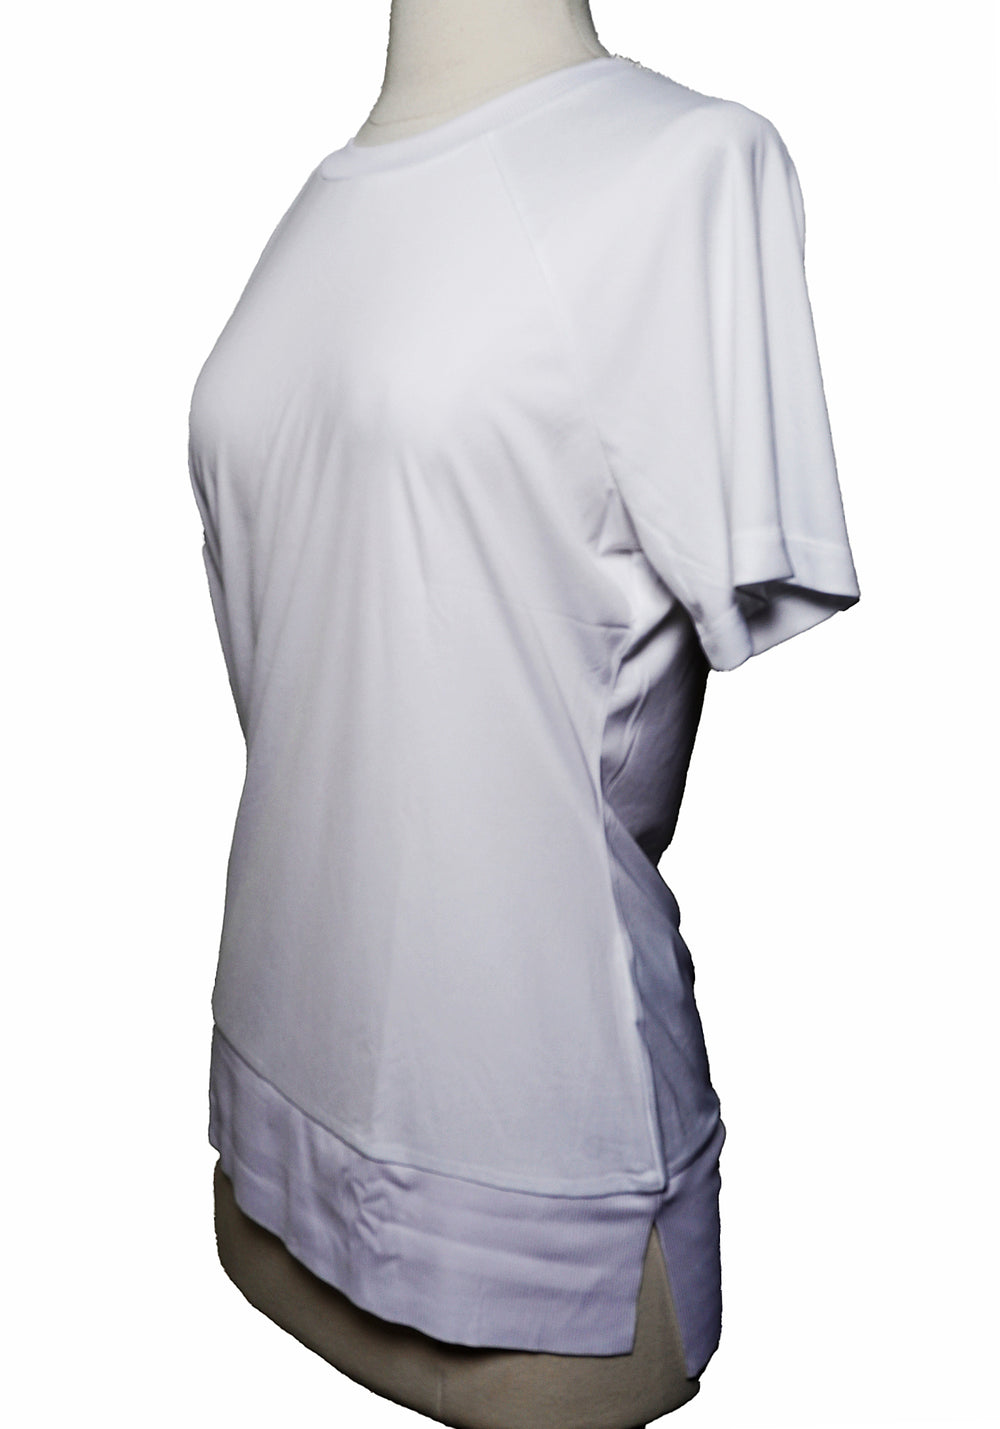 Greg Norman Short Sleeve Top - White - Skorzie